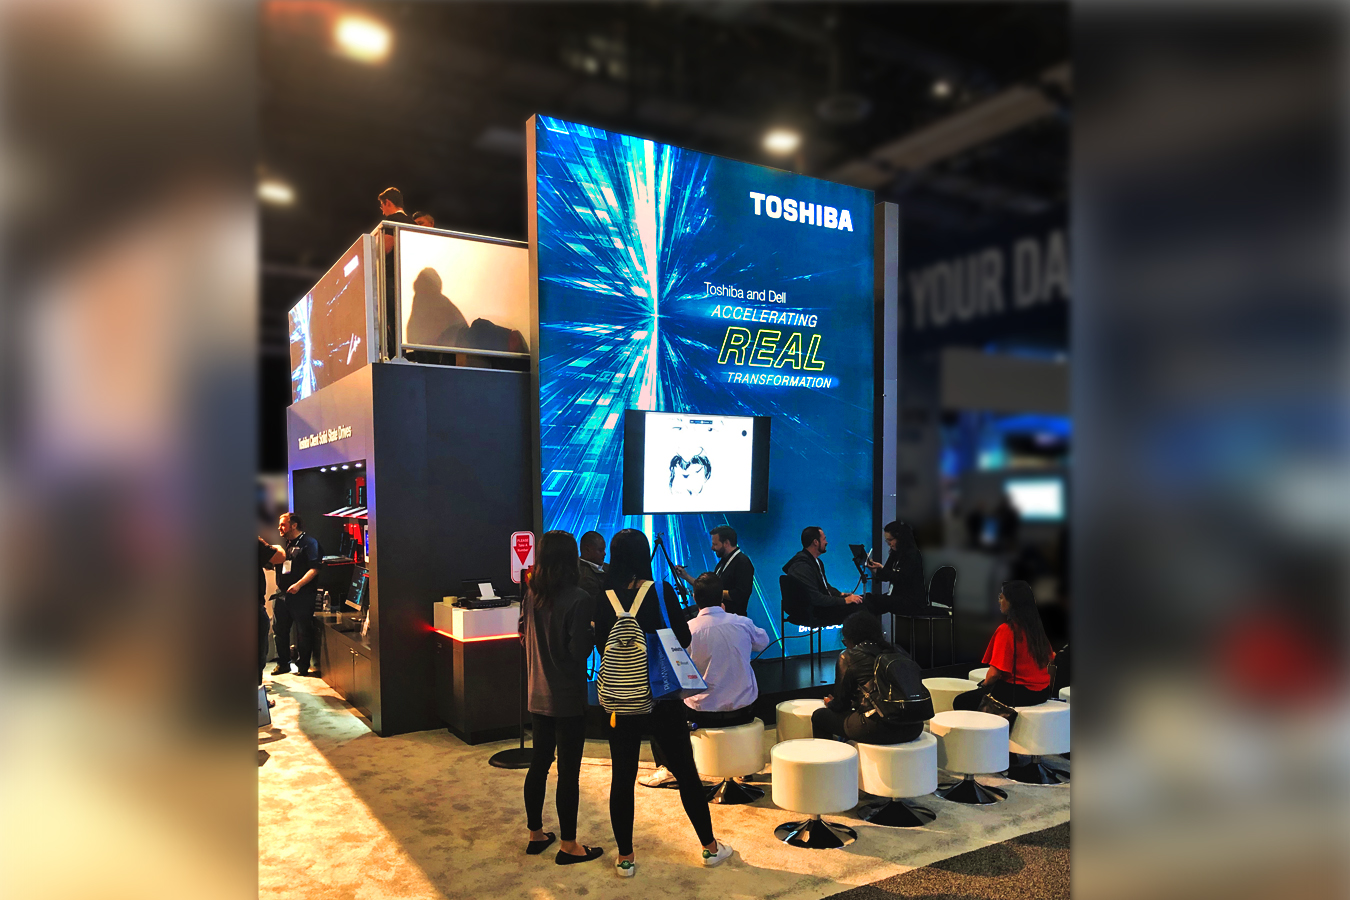 Toshiba MA 2-story booth with lightbox